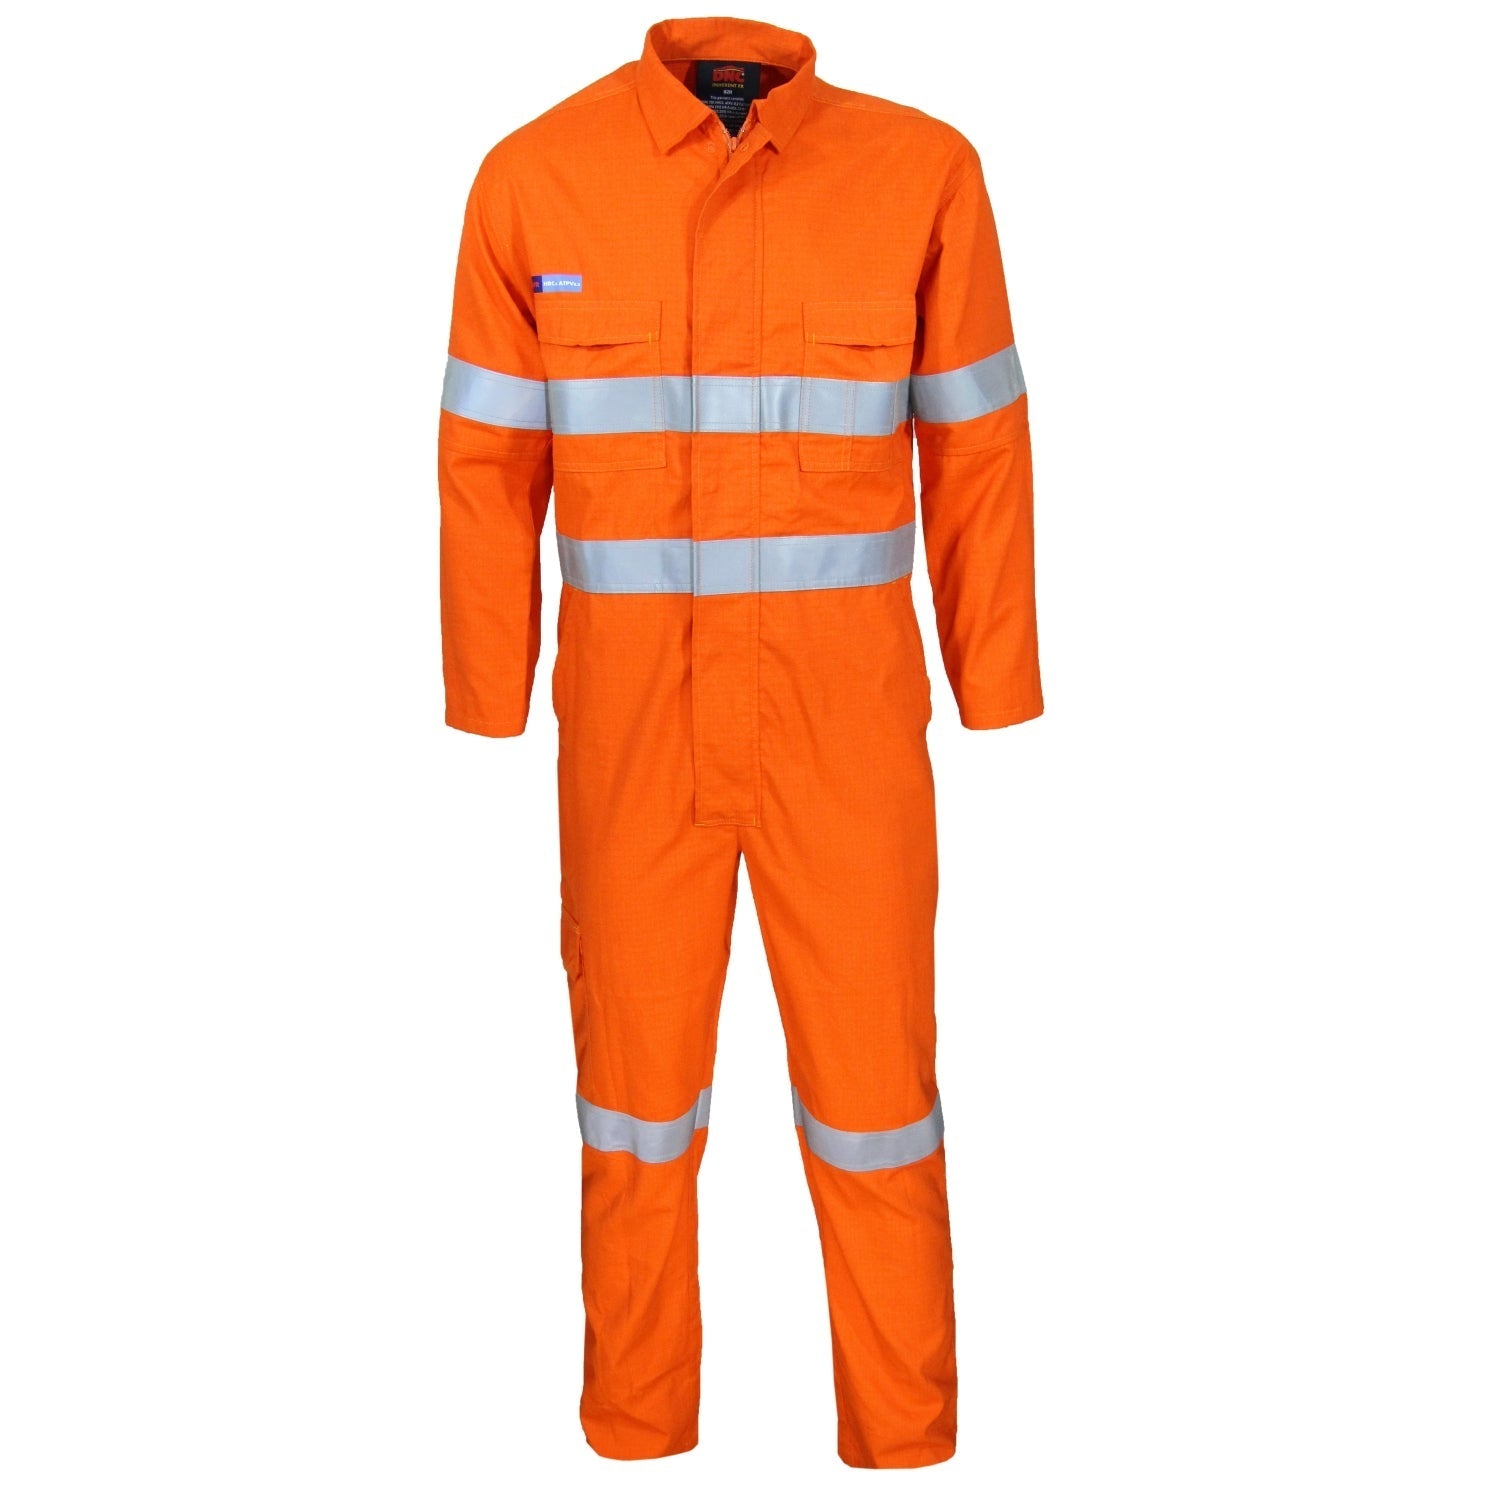 Flamearc Hrc2 D/n Coveralls - 3482 Work Wear DNC Workwear Orange 77R 